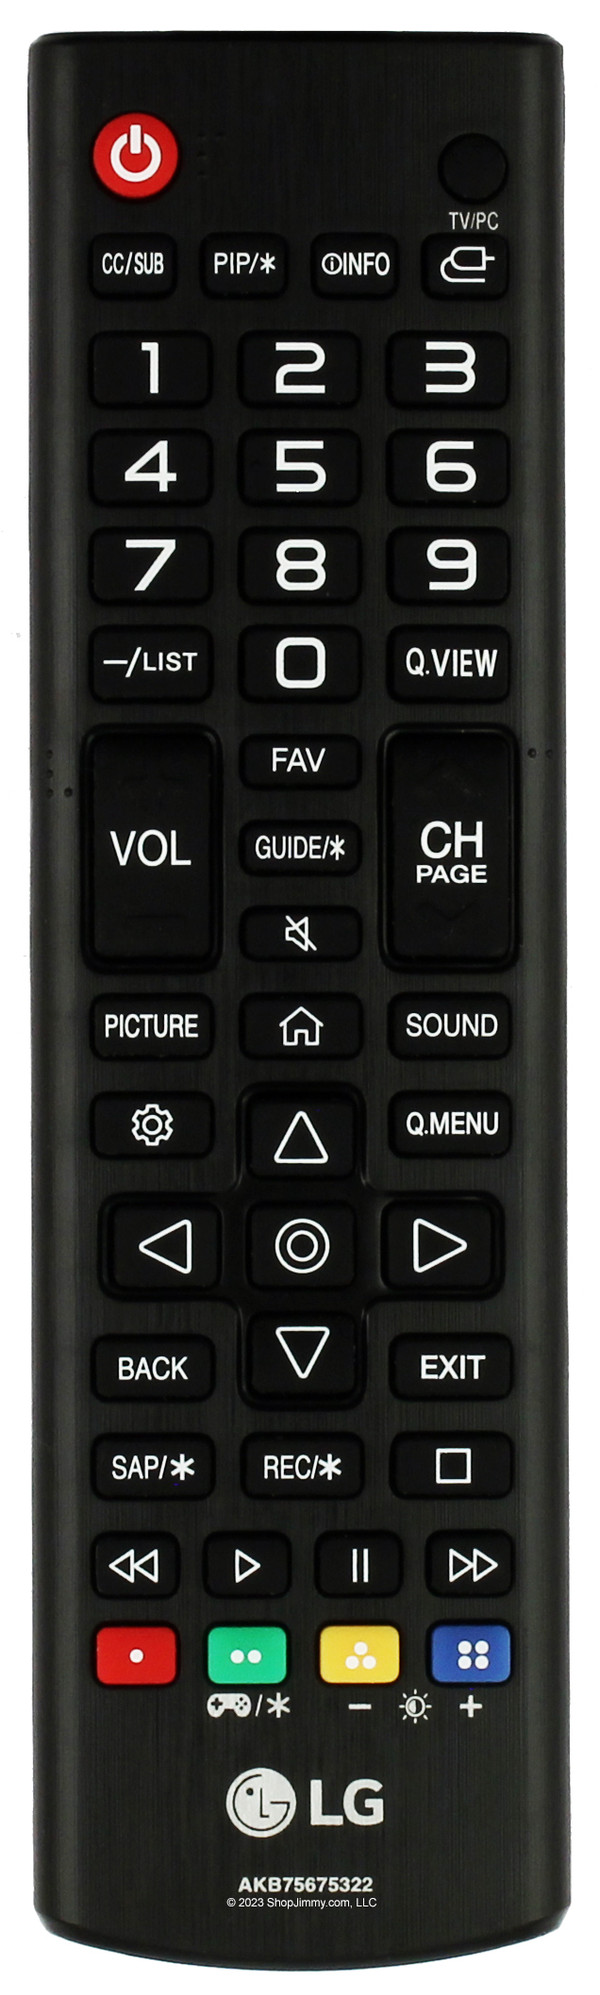 LG AKB75675322 Remote Control -- NEW